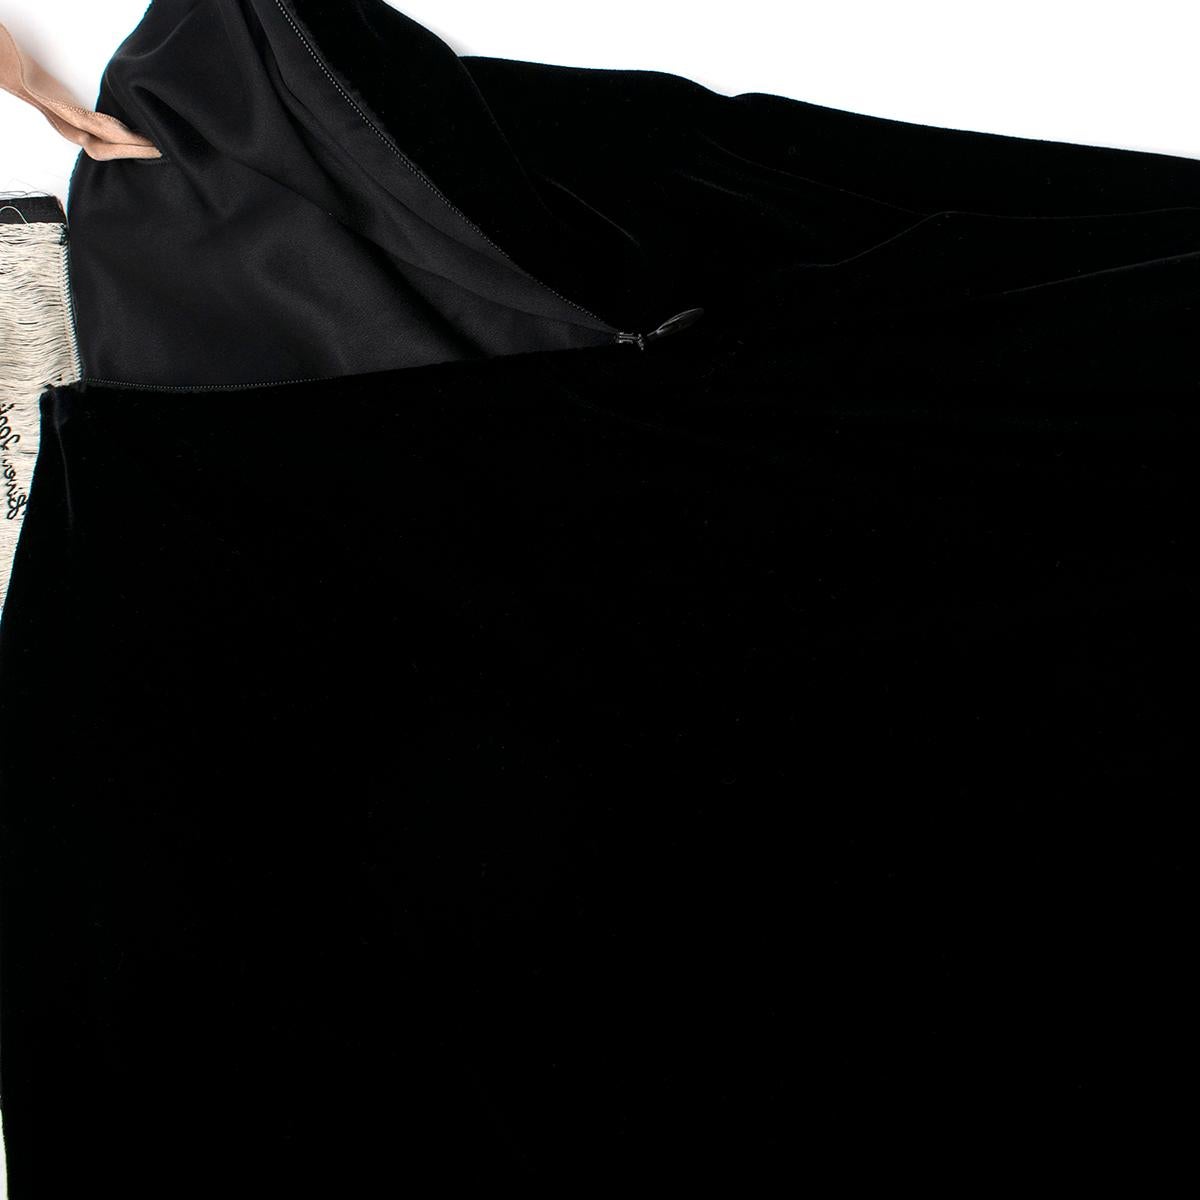 Lanvin by Alber Elbaz Black Velour Asymmetric Dress 36 FR For Sale 3